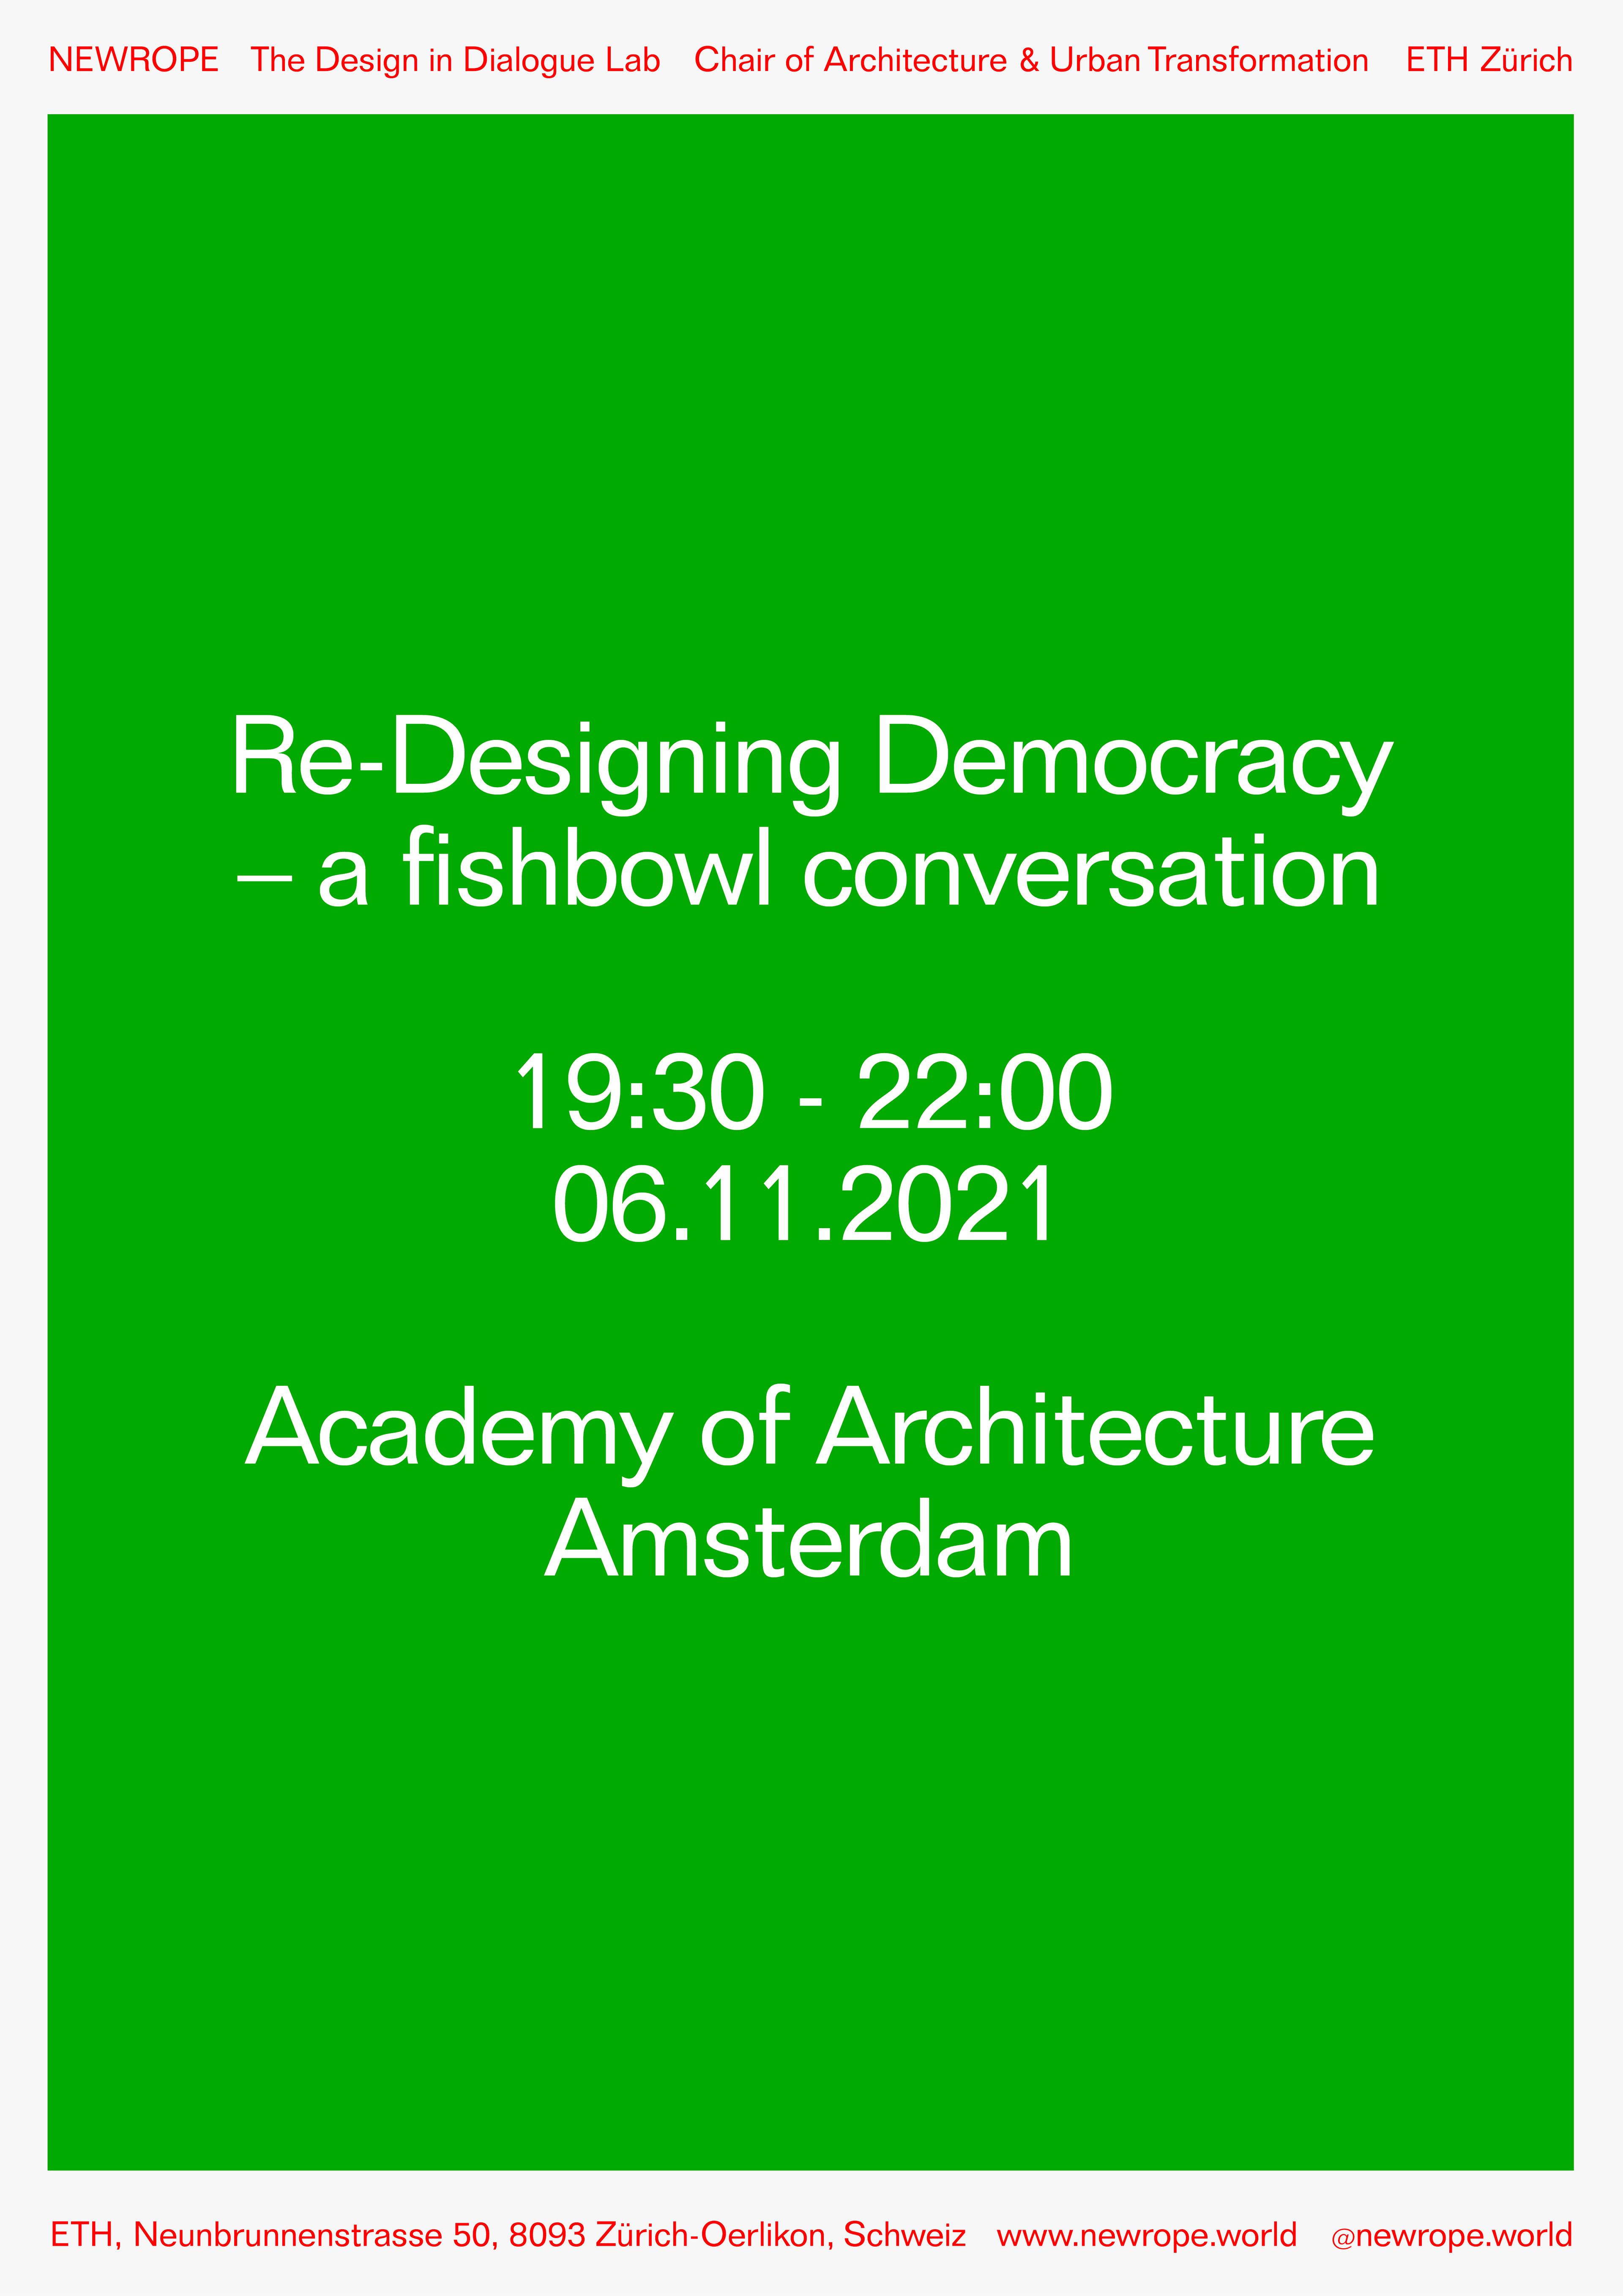 Re-designing Democracy - a fishbowl conversation